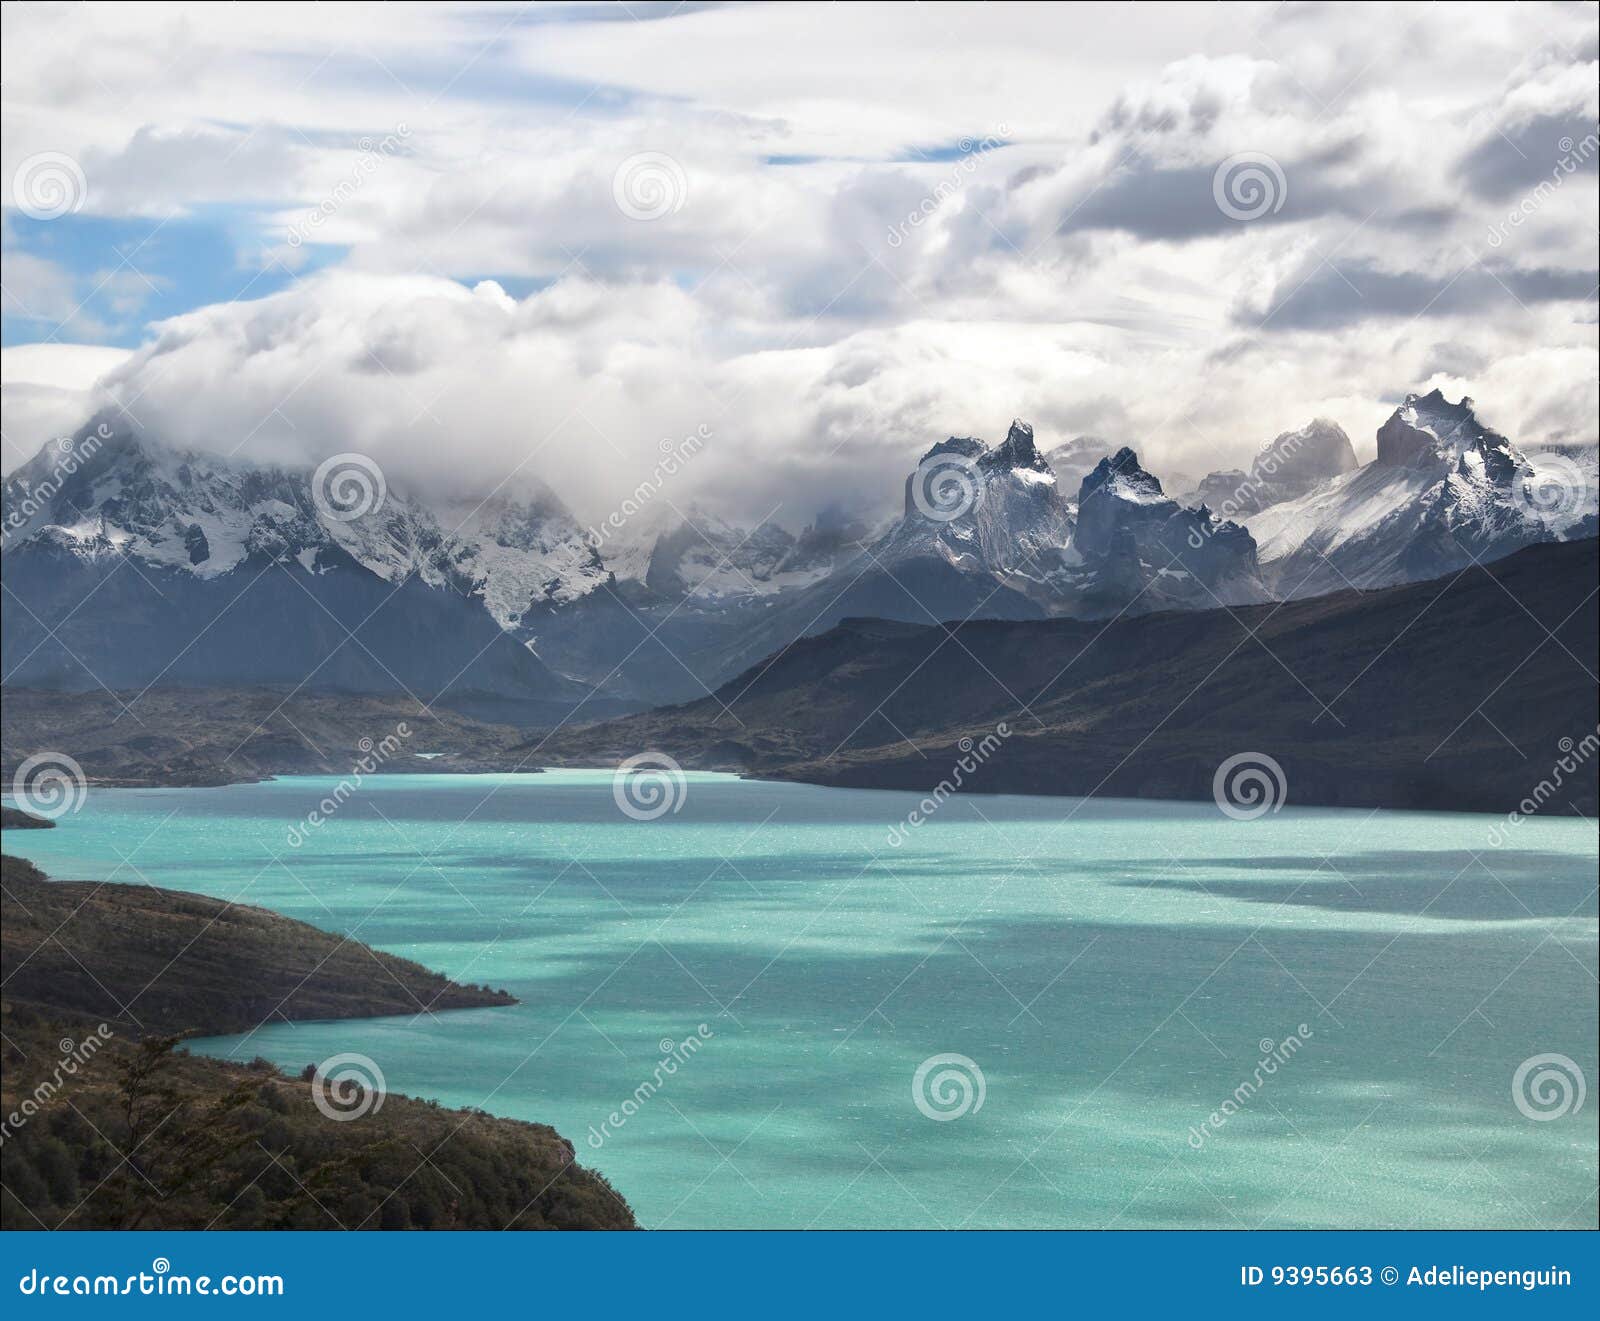 torres del lake, patagonia, chile